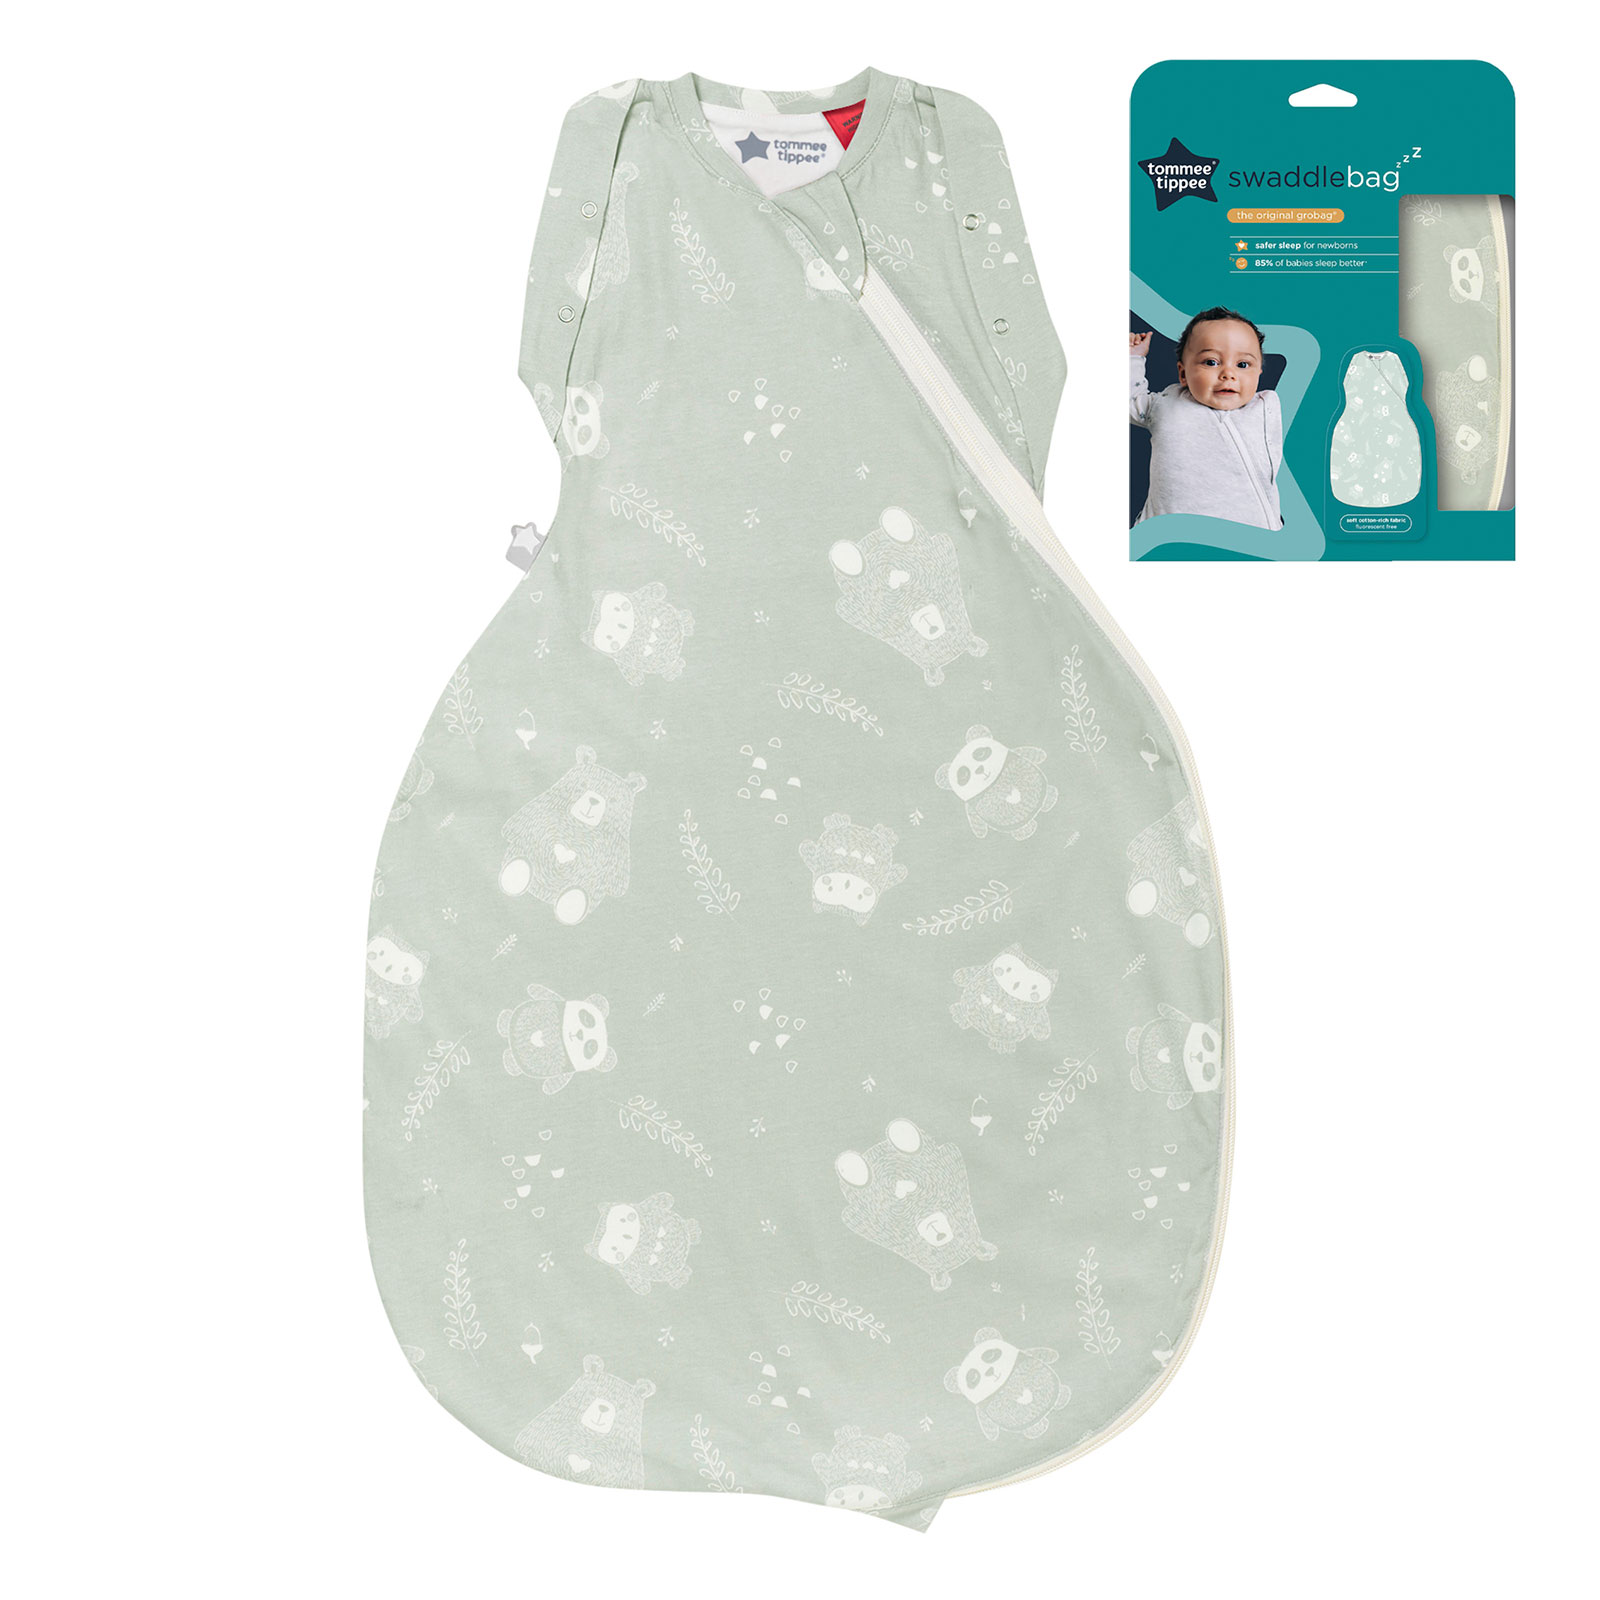 Tommee Tippee 3-6 Months 2.5 Tog Baby Sleep Swaddlebag - Woodland Gofer